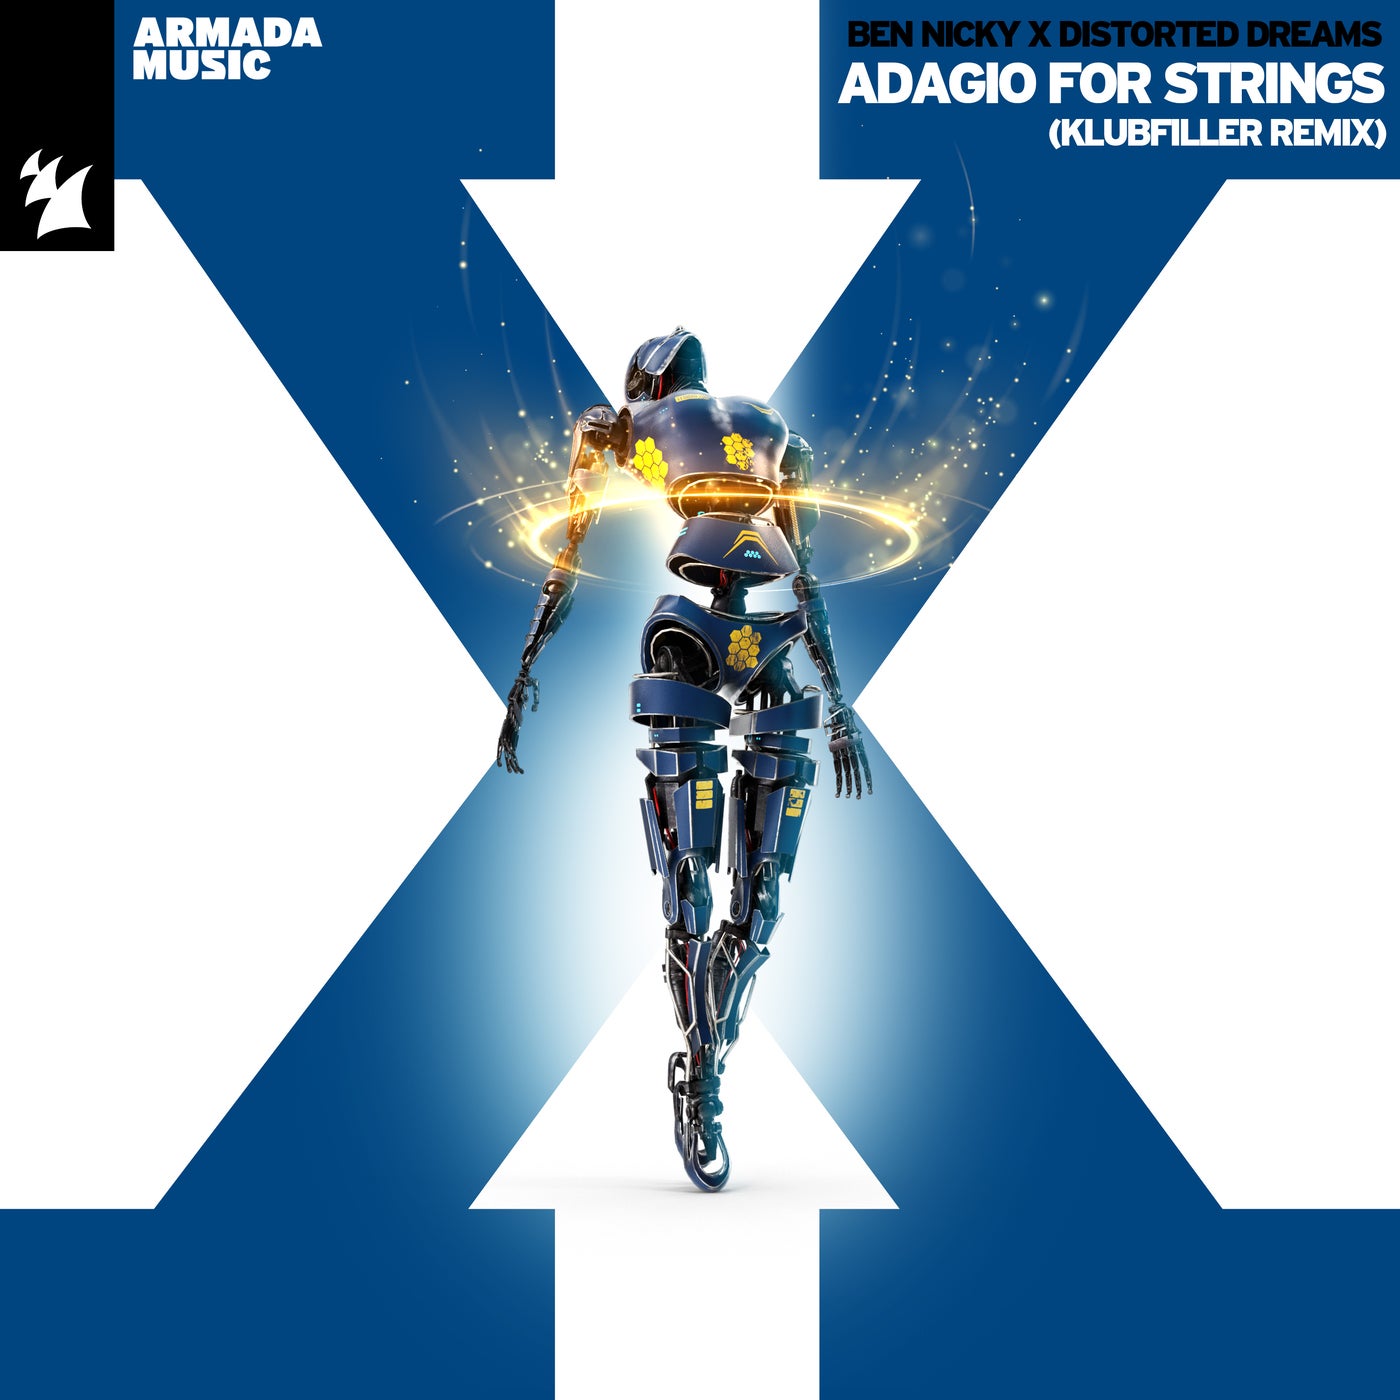 Adagio For Strings - Klubfiller Remix